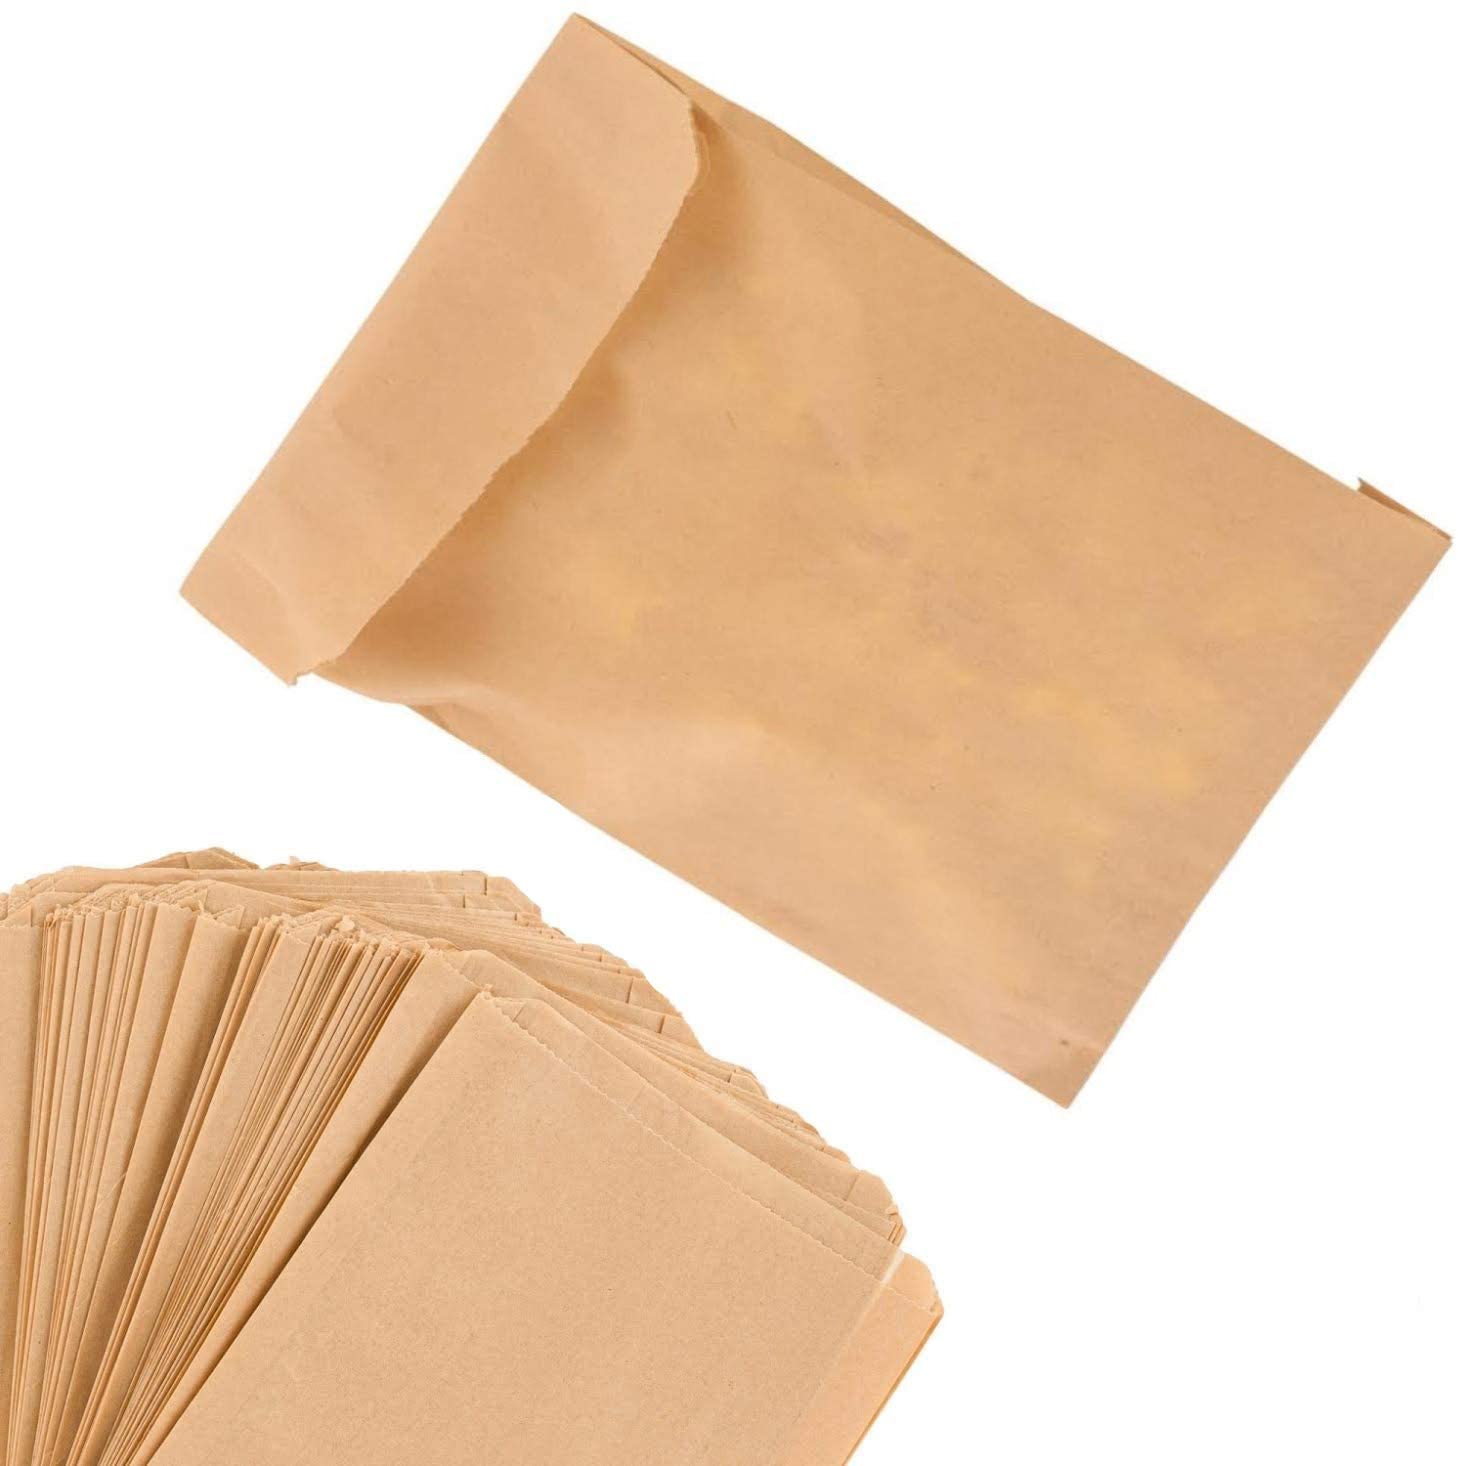 Stock Your Home 52 lb Kraft Brown Paper Bags 100 Count - Kraft Brown